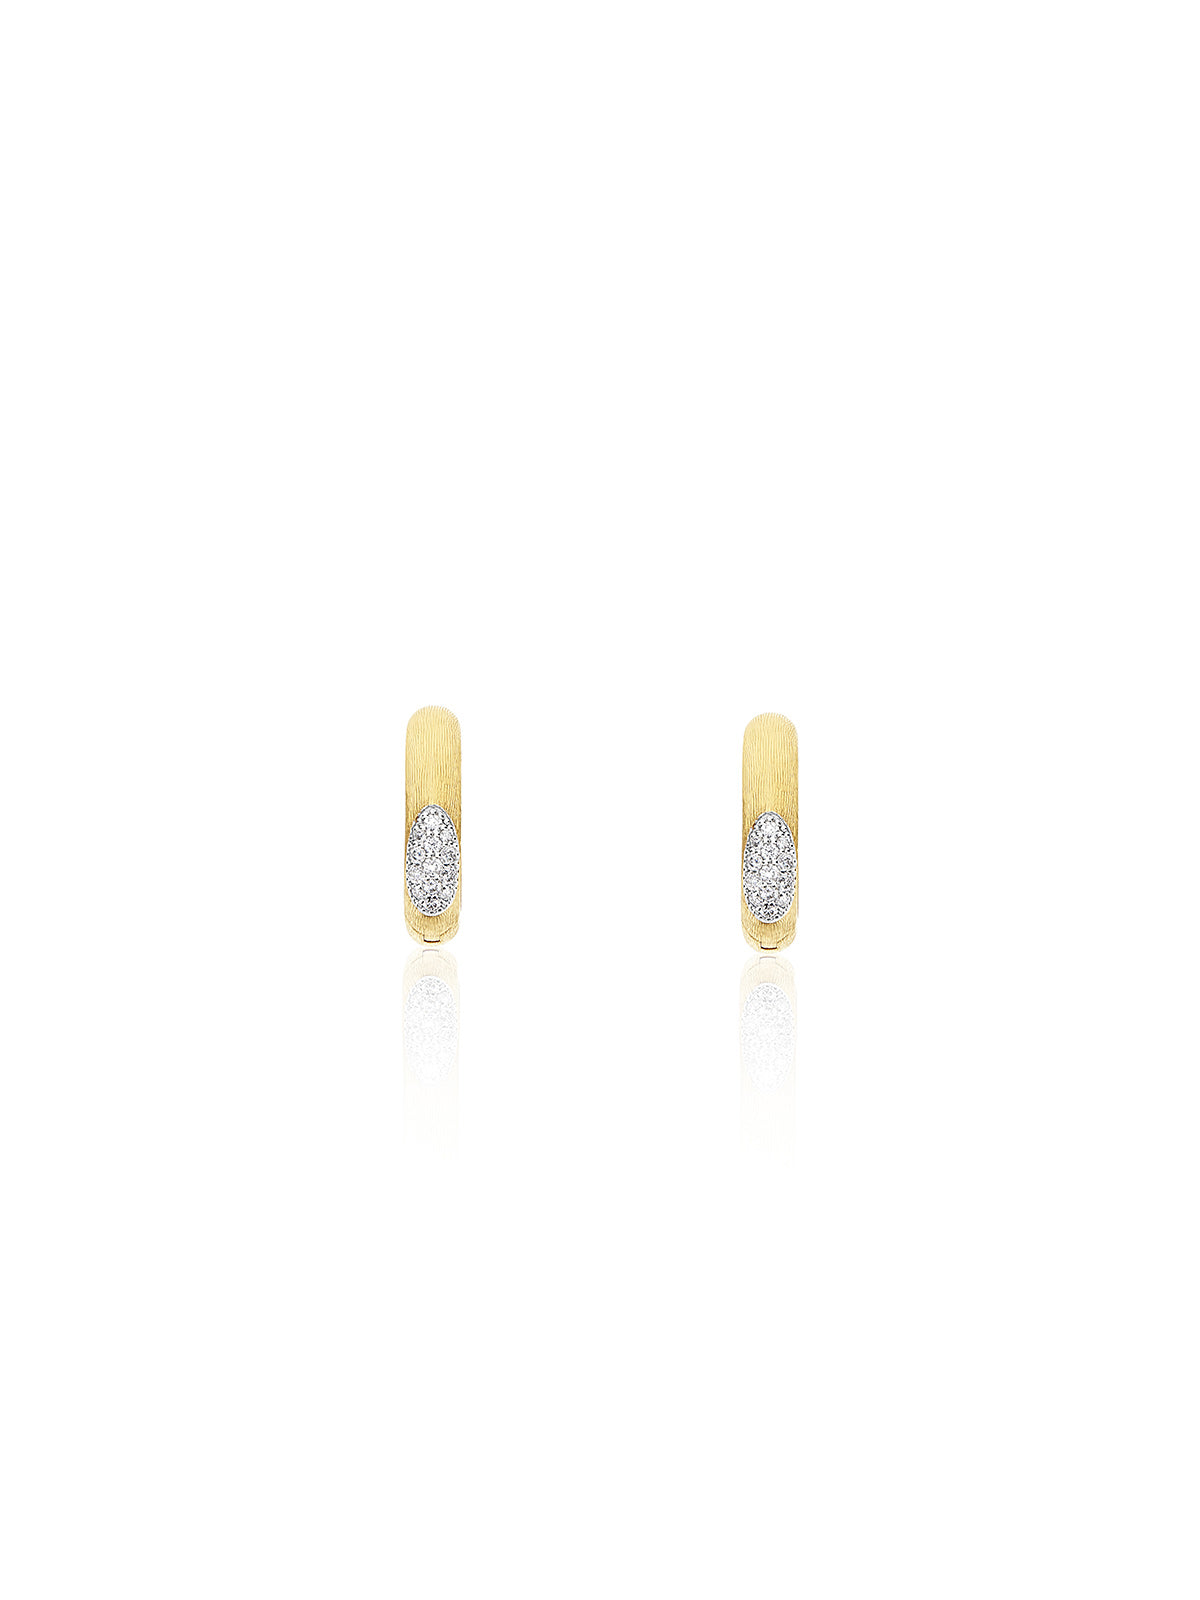 "Libera" small squared gold earrings